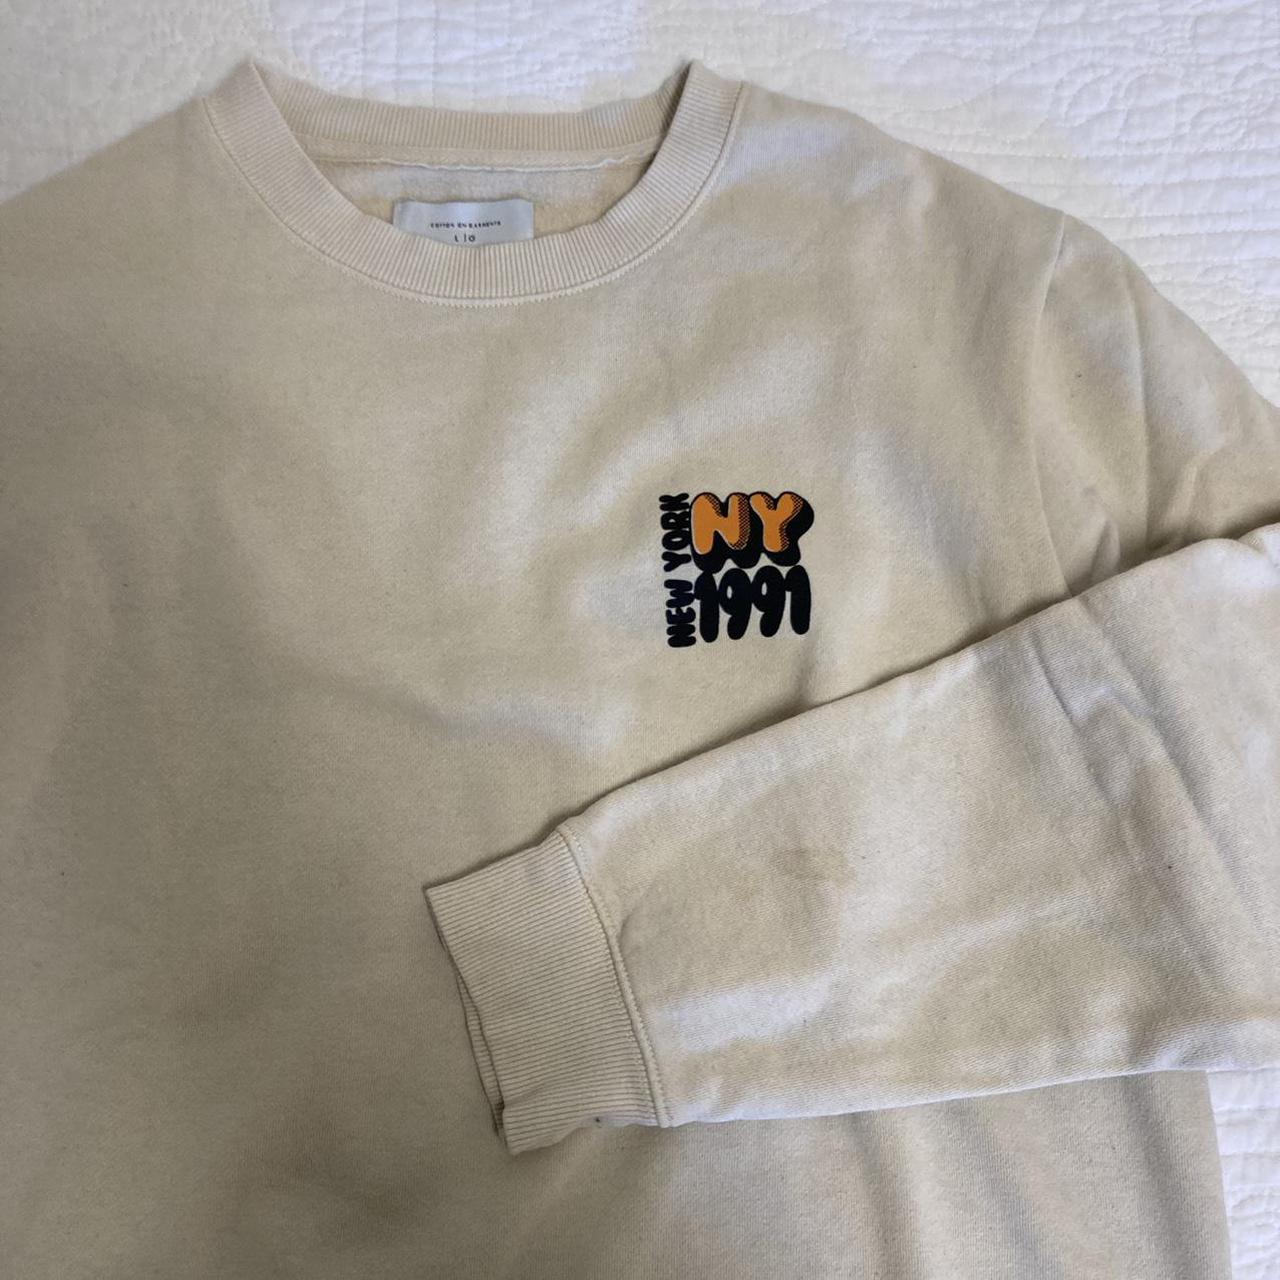 Product Image 1 - Cotton On NY Sweatshirt
• Tagged